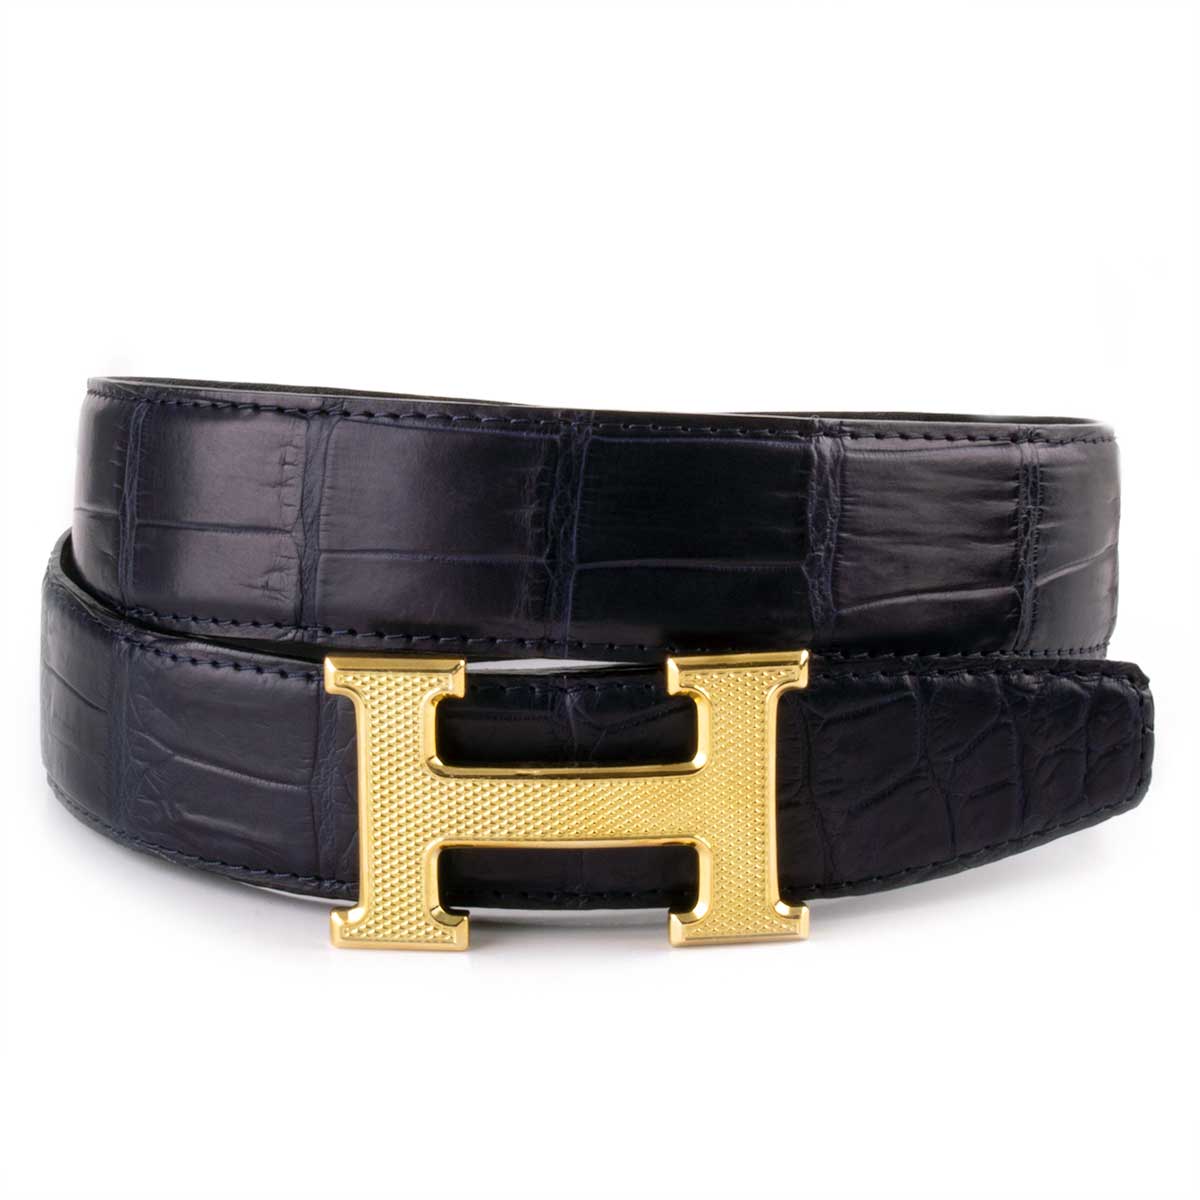 Authentic Hermes Belt Black Leather SP Buckle Horse Logo 1997 